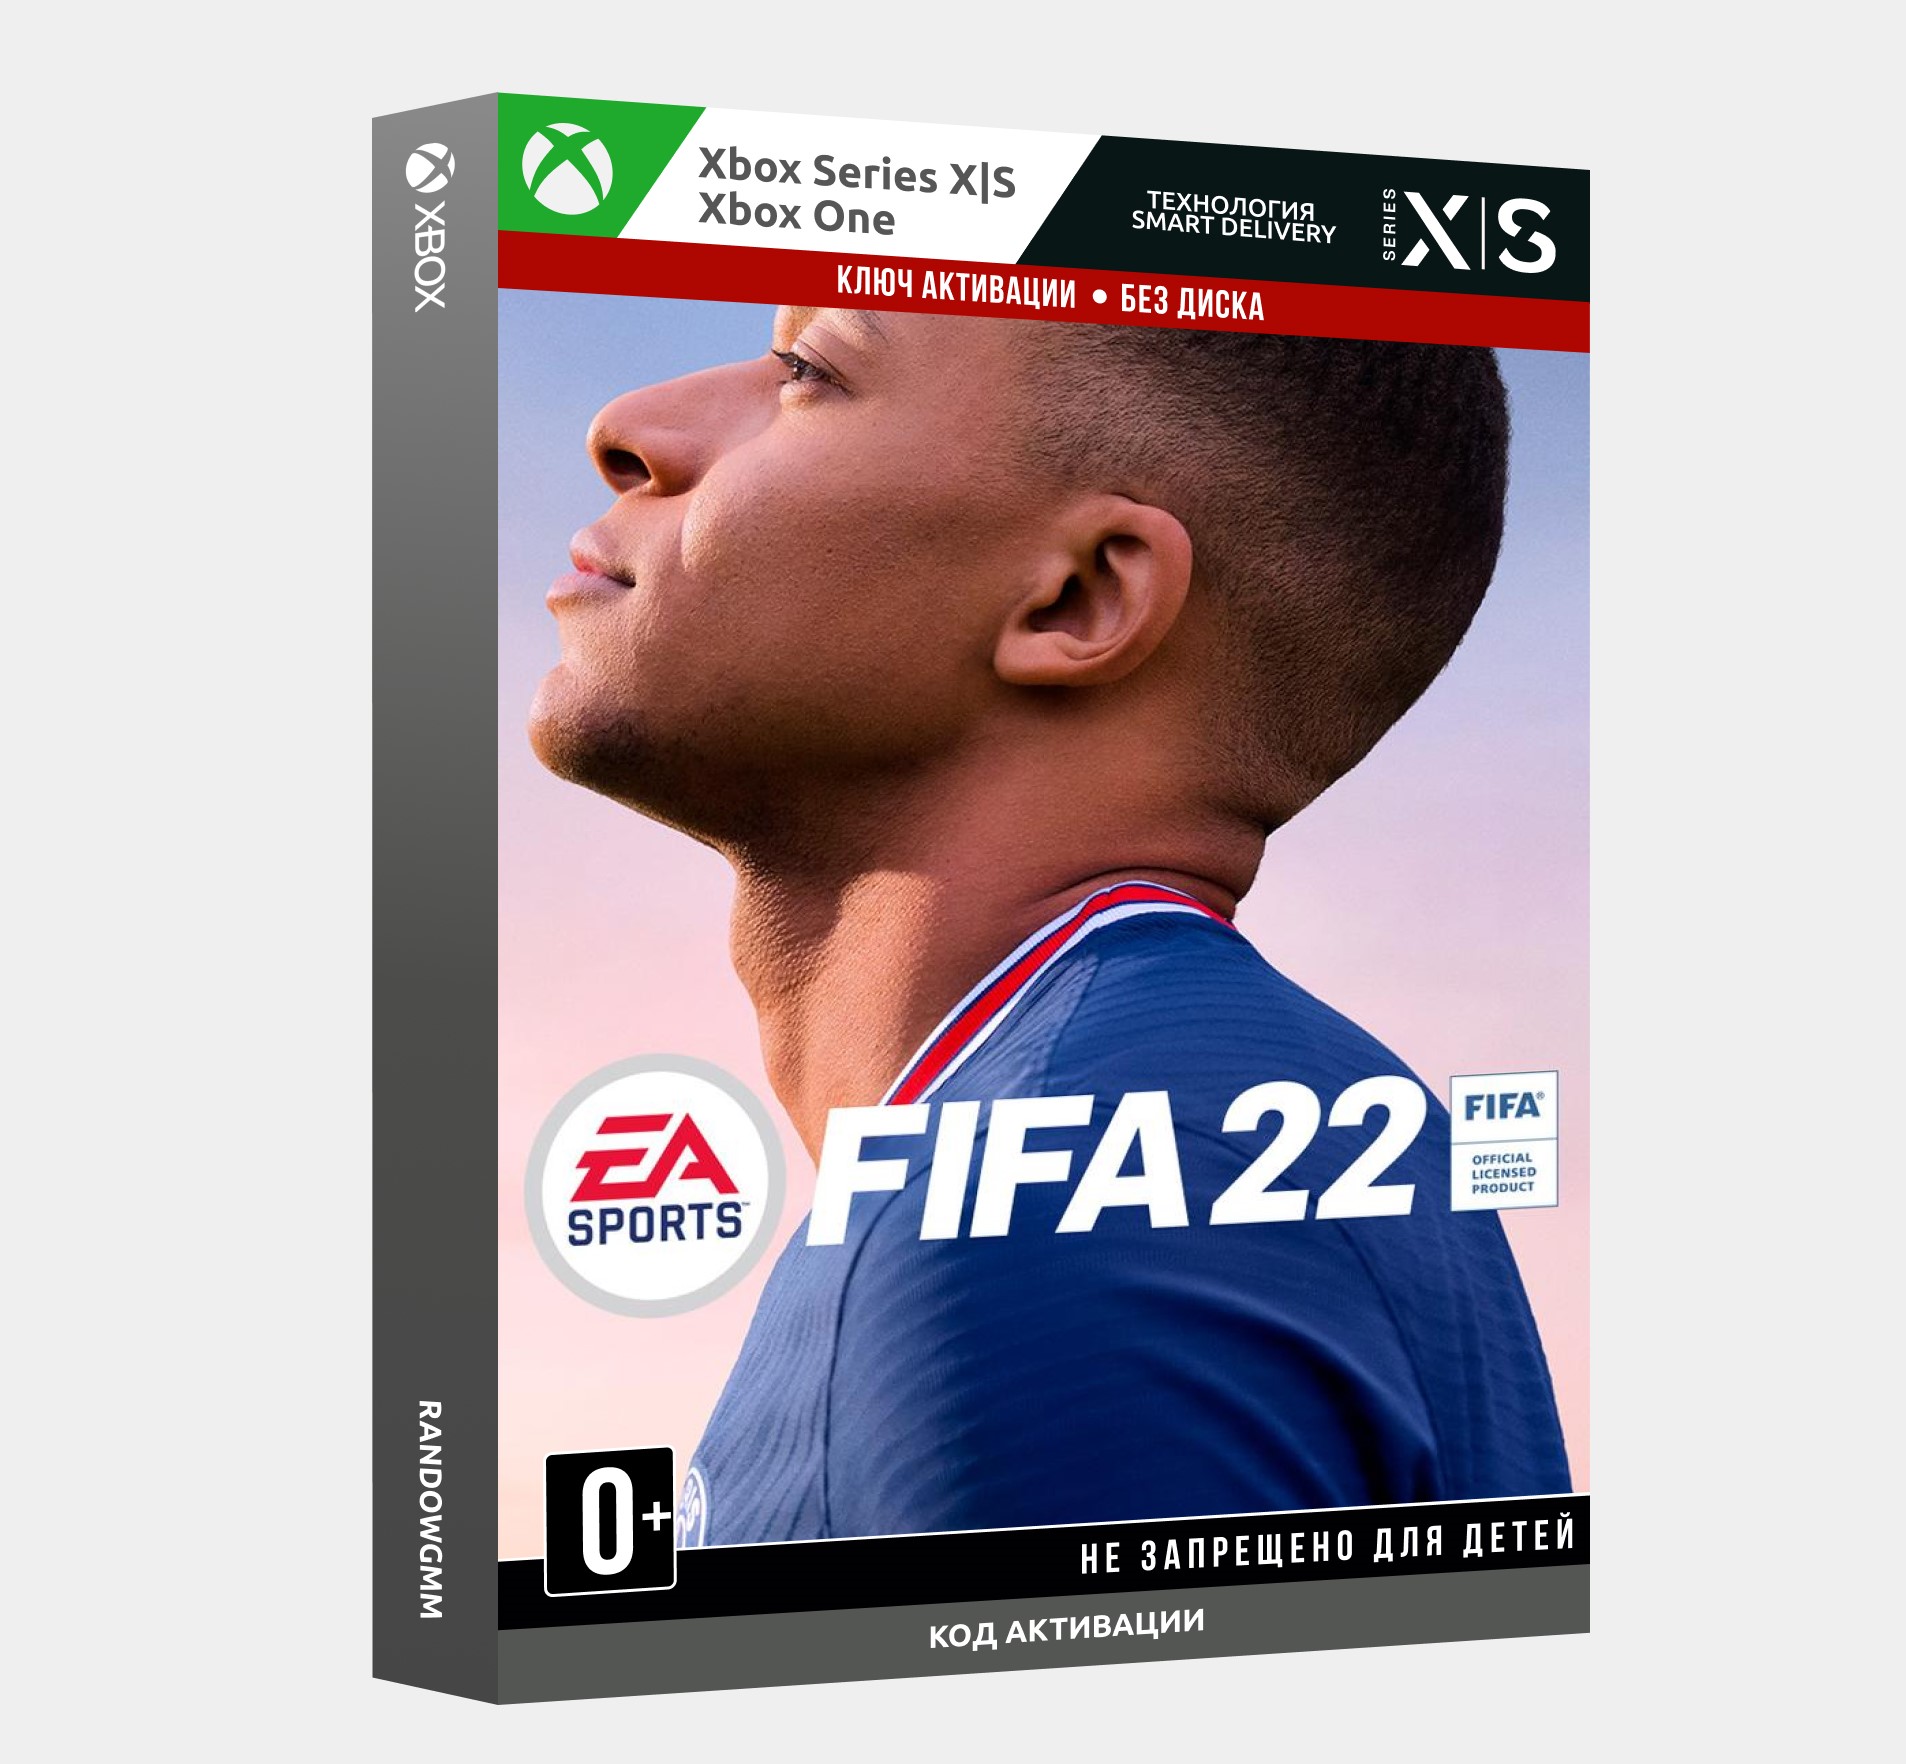 Fifa ключи. FIFA 22 Xbox. ФИФА 22 на Xbox 360. FIFA 22 (Xbox one). Ключ для ФИФА 22.